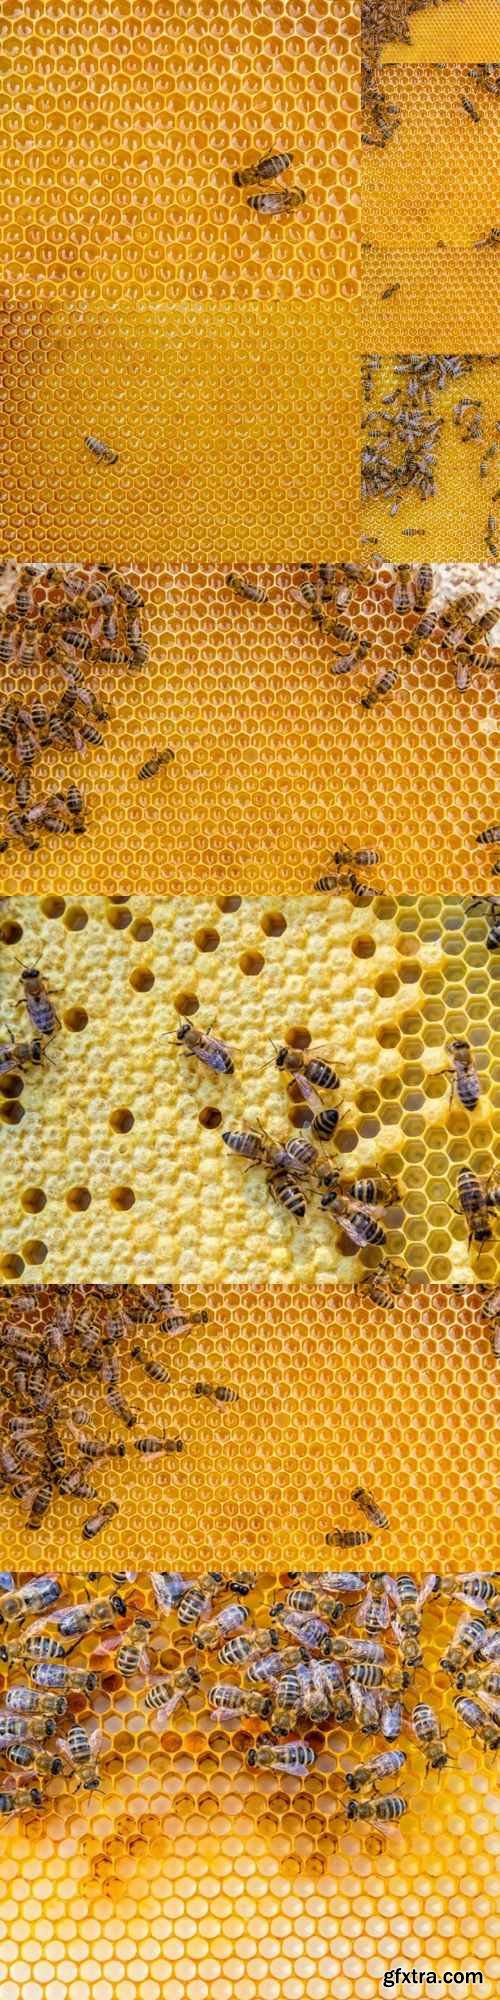 Bee honeycomb - 10 UHQ JPEG